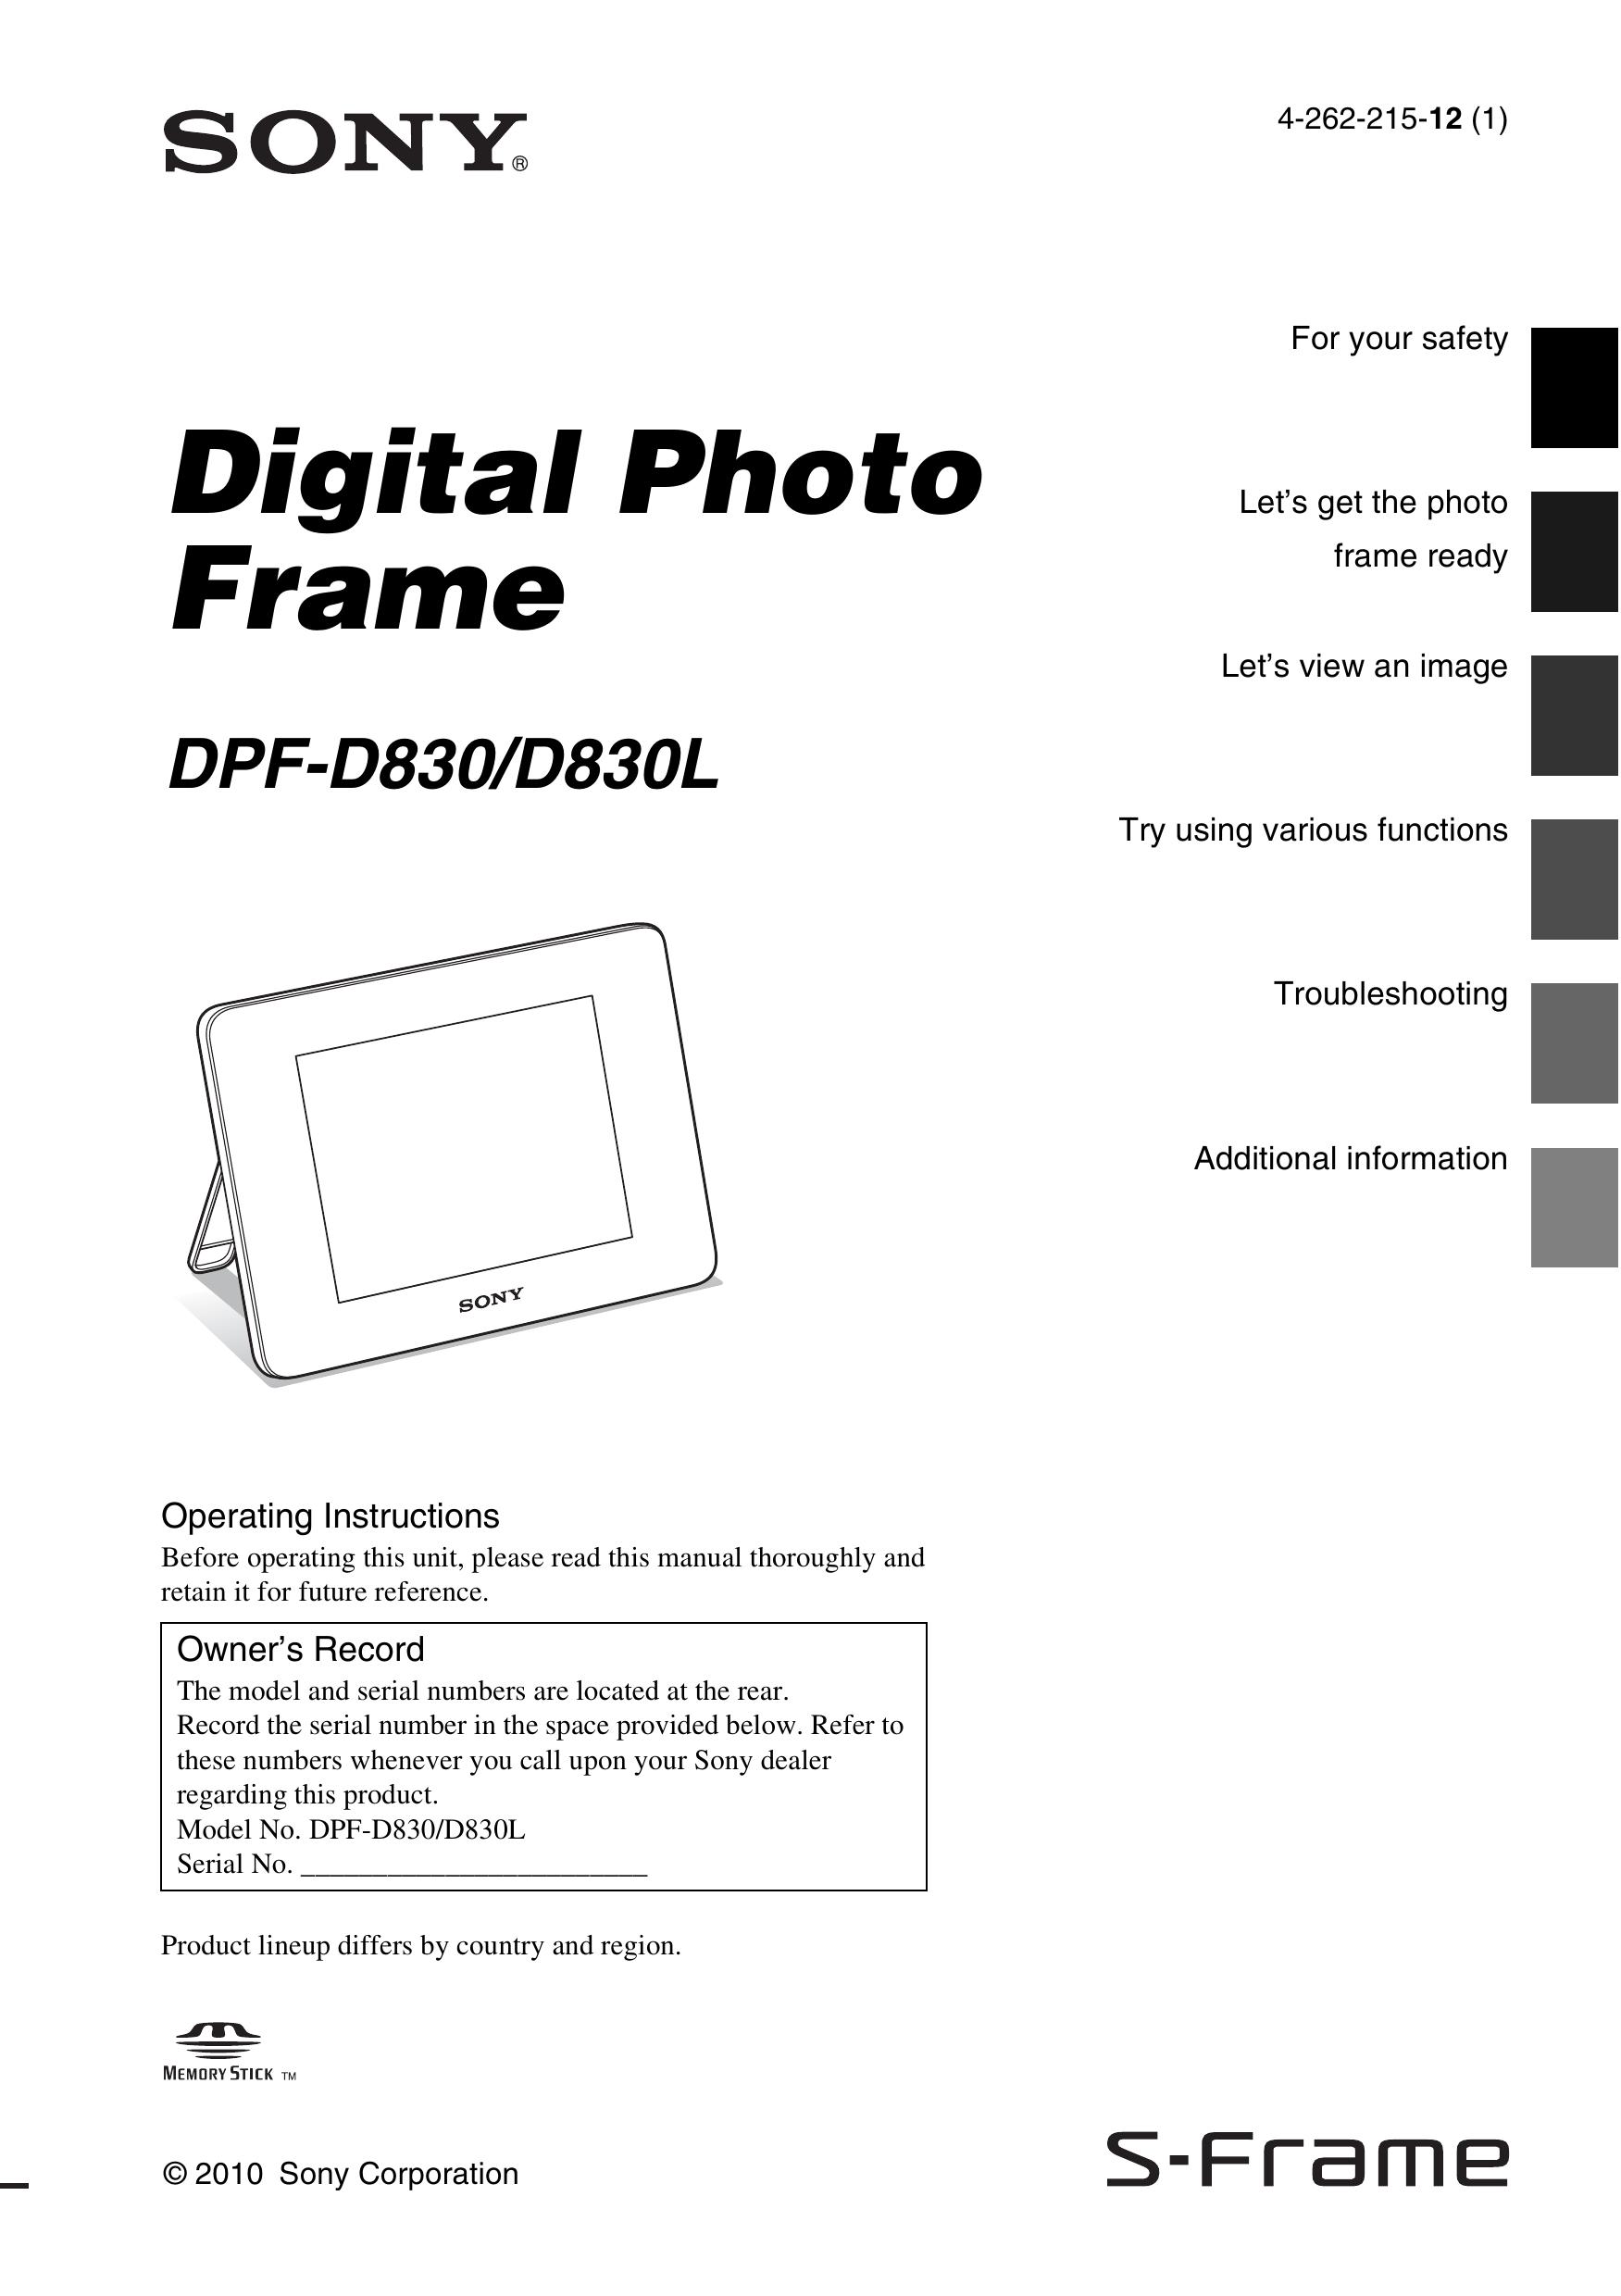 Sony DPF-D830L Digital Photo Frame User Manual